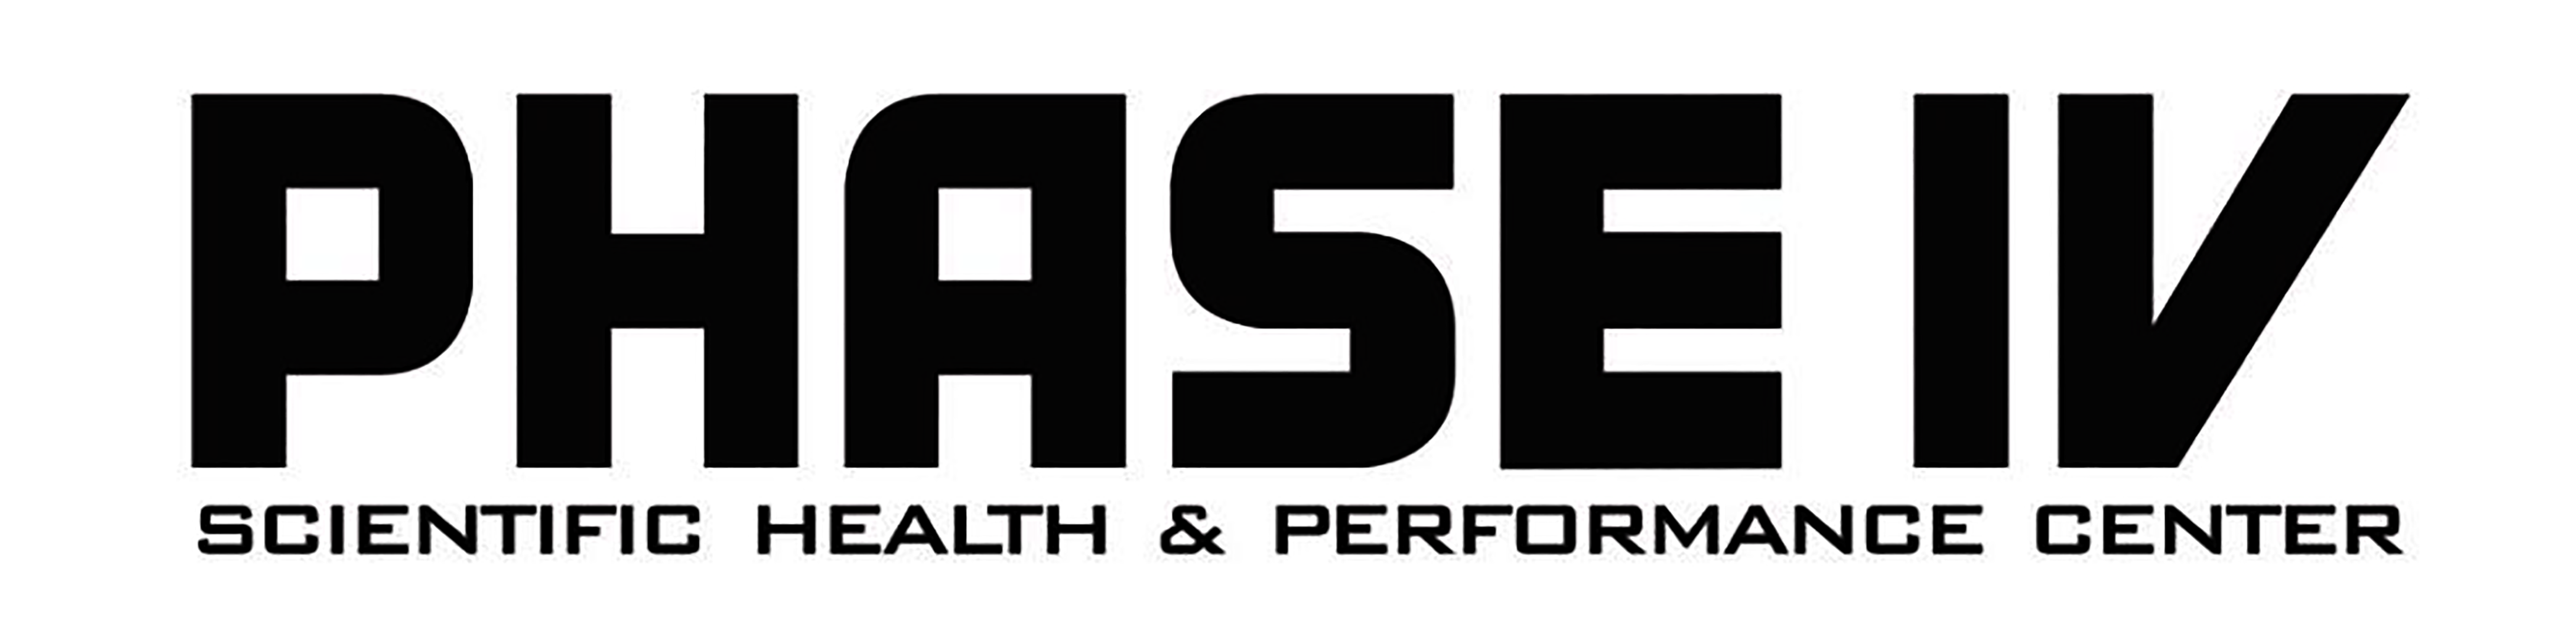 Phase_IV_Logo_Black